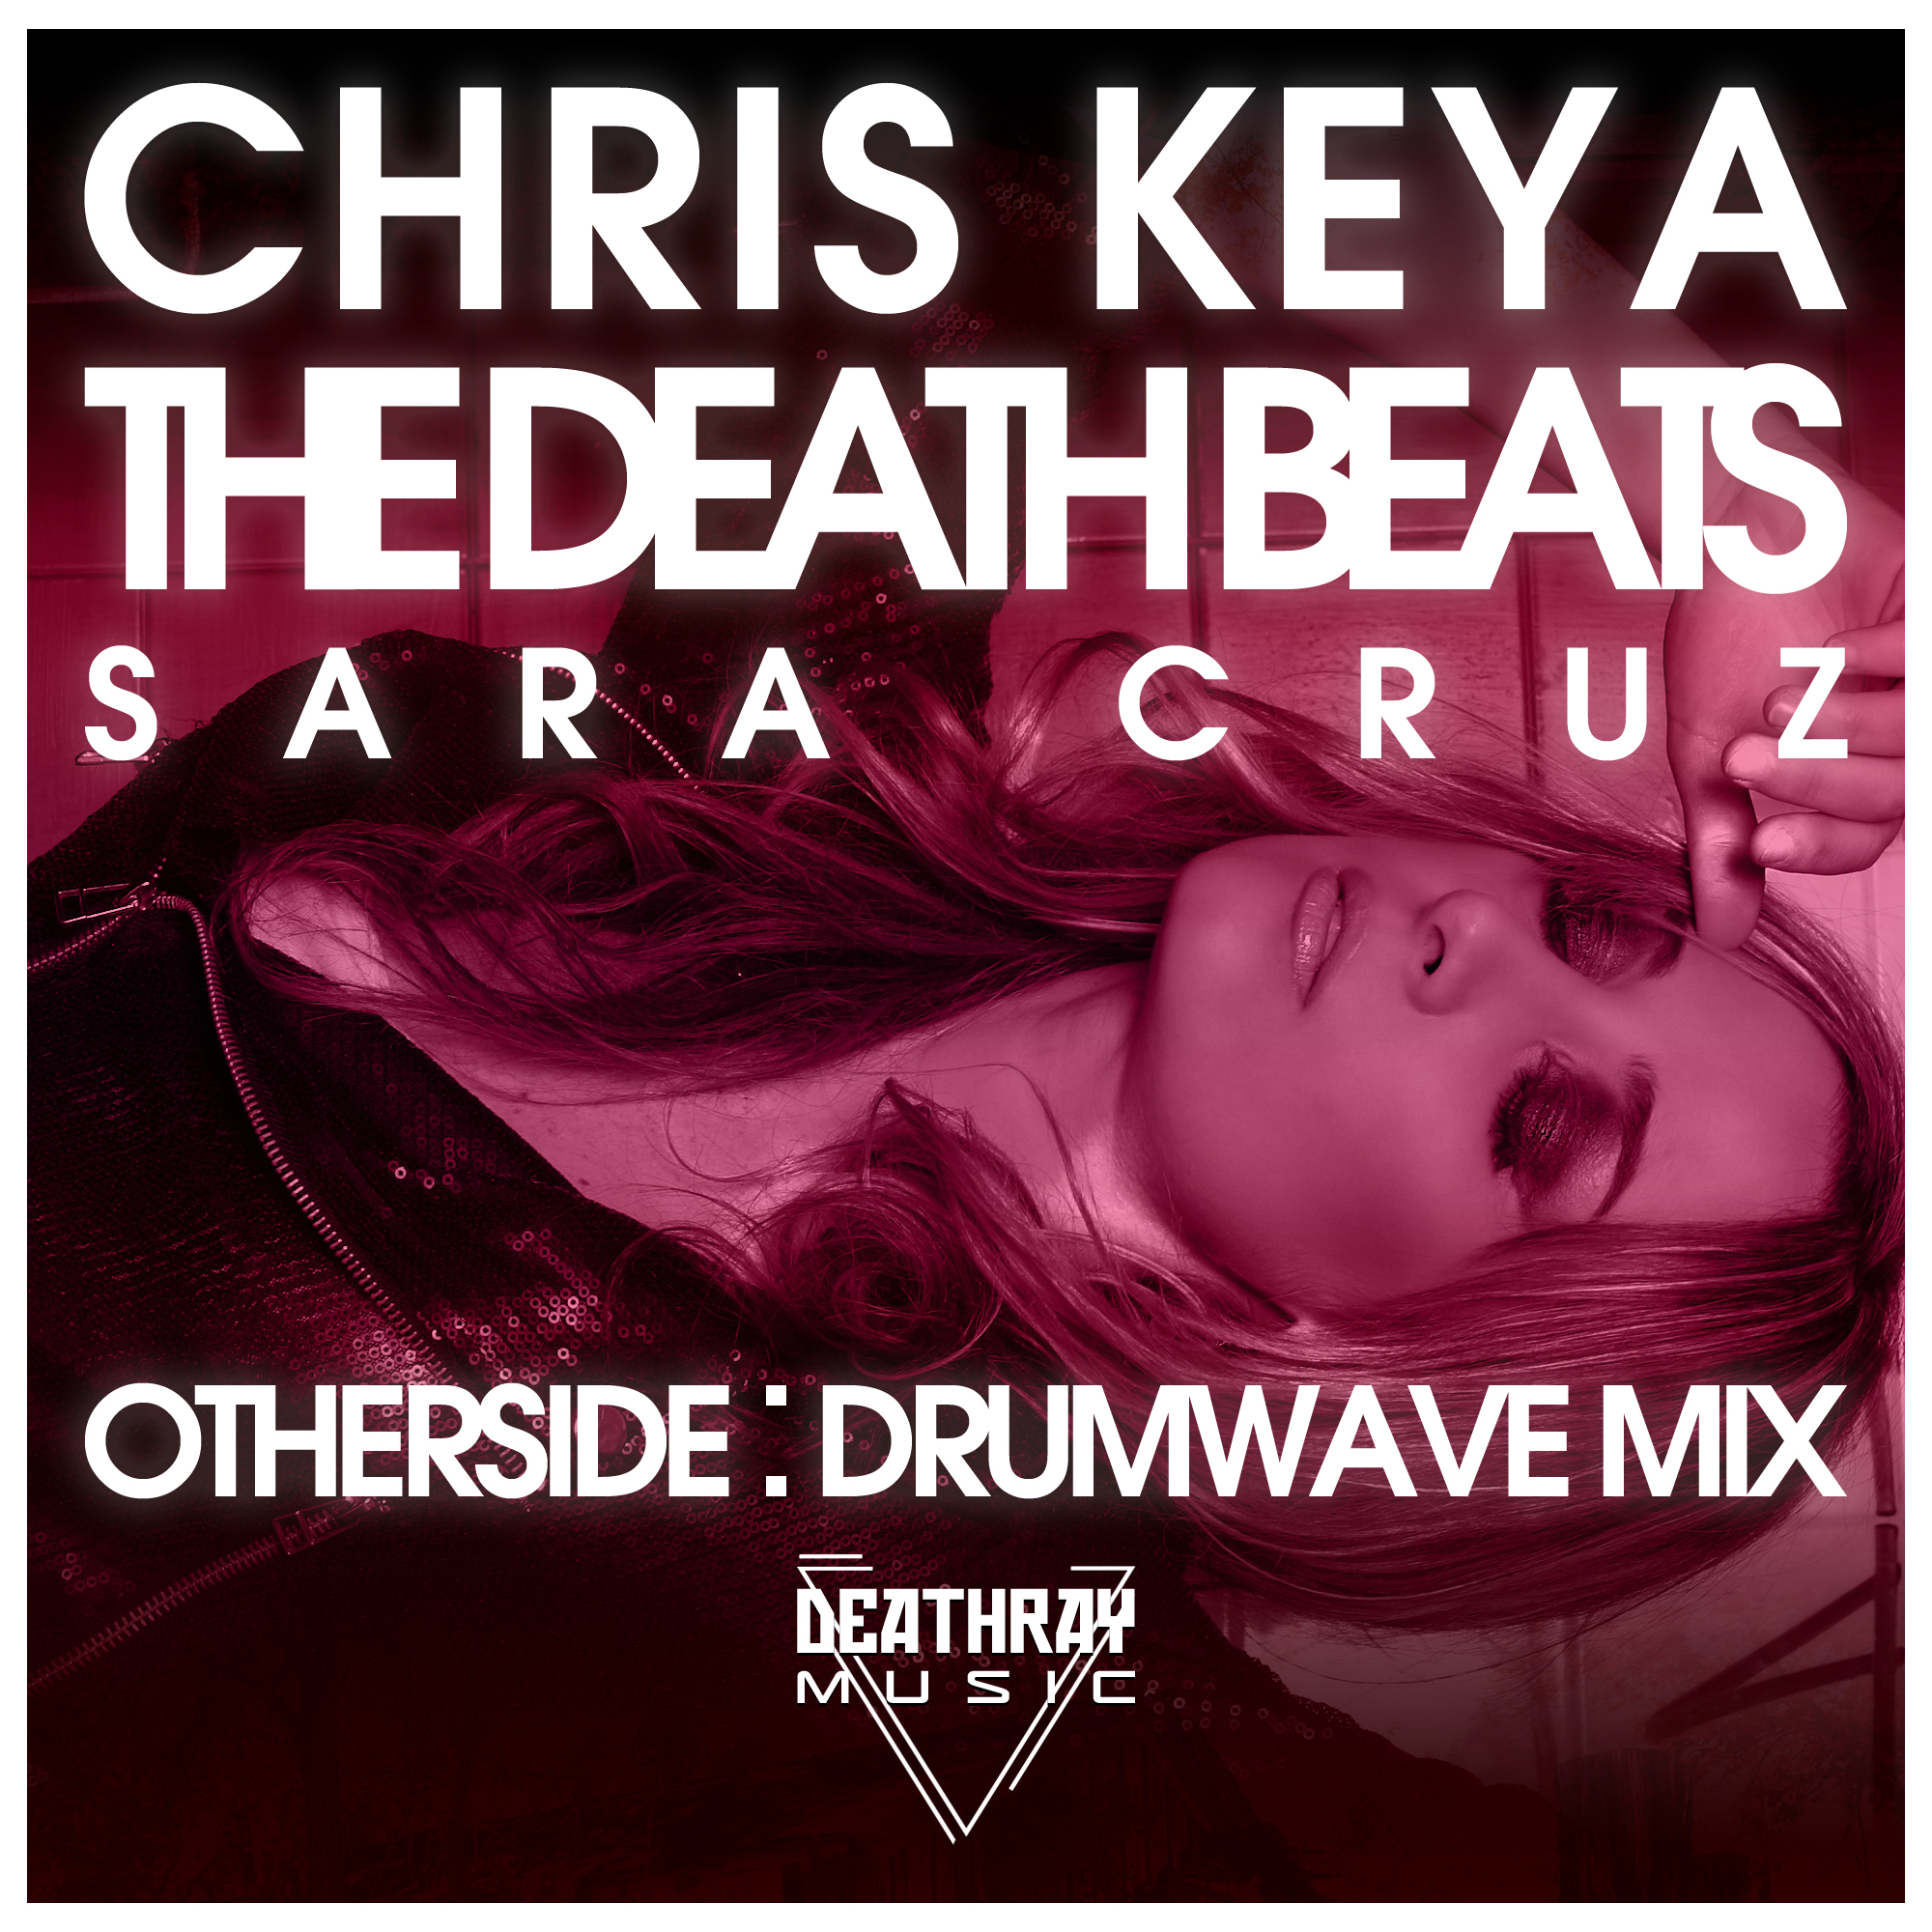 Chris Keya x The Death Beats x Sara Cruz - Otherside - Drumwave Mix